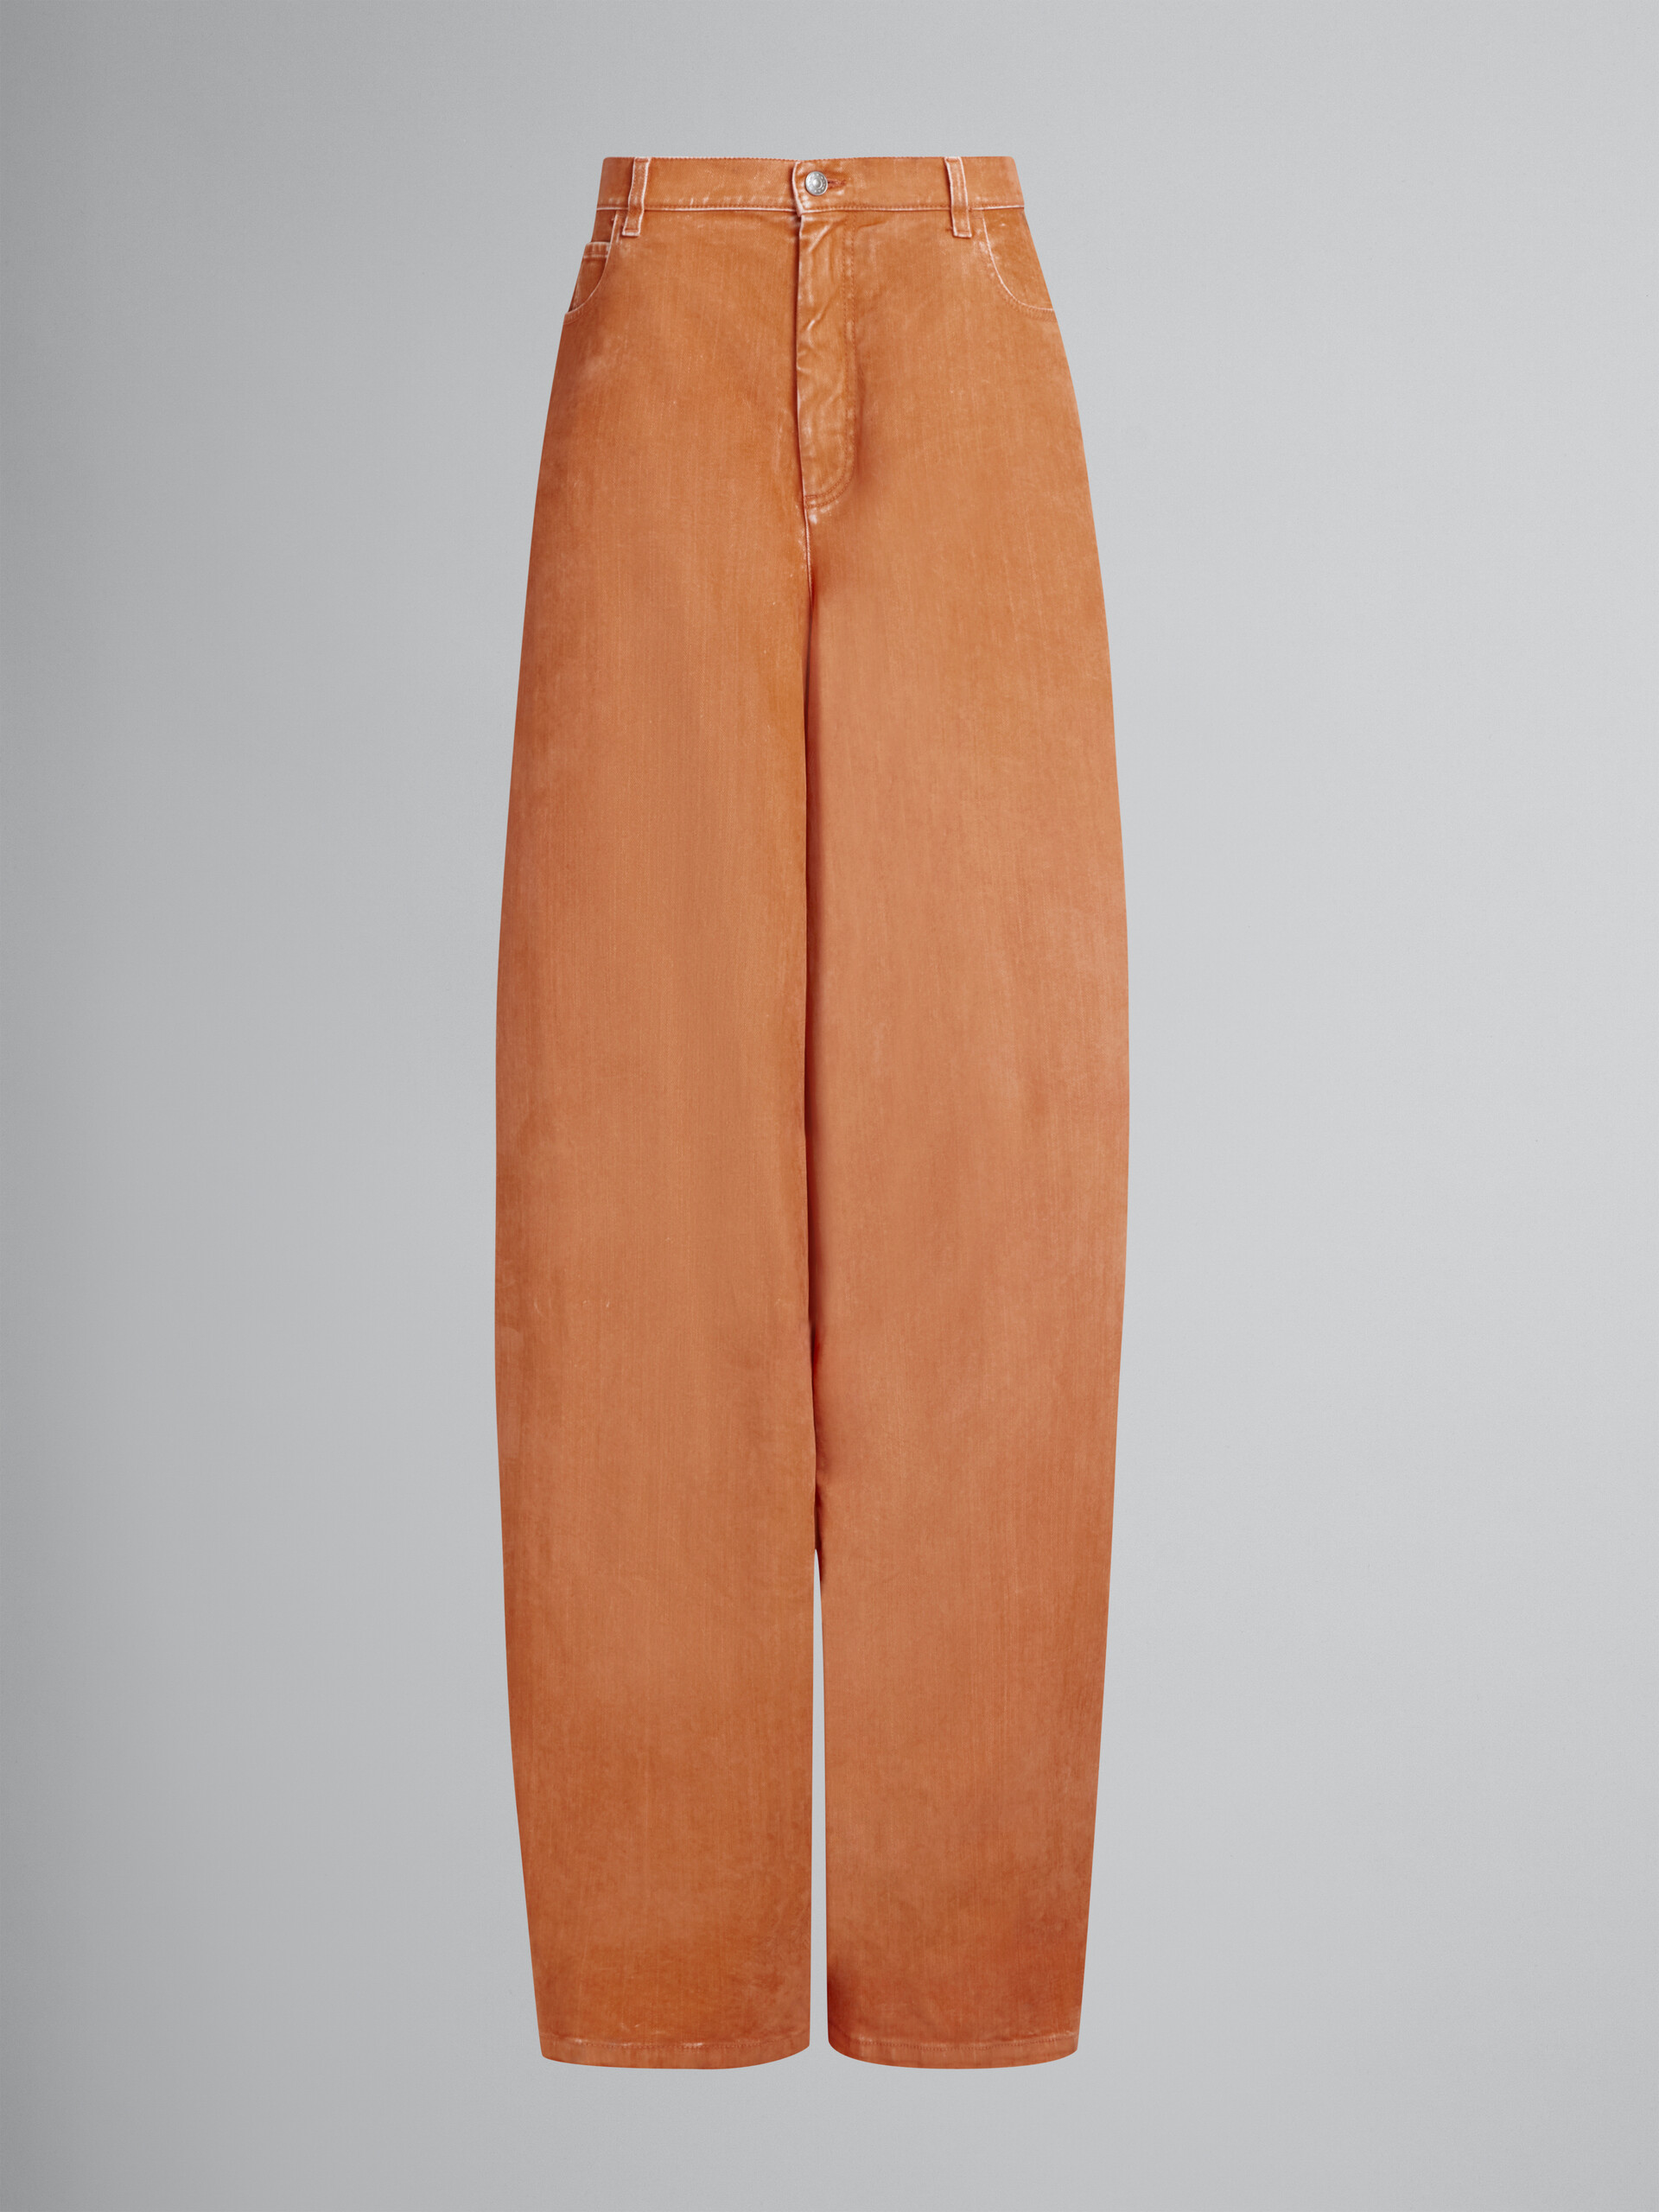 Orange flocked denim ultra-wide-leg trousers - Pants - Image 1